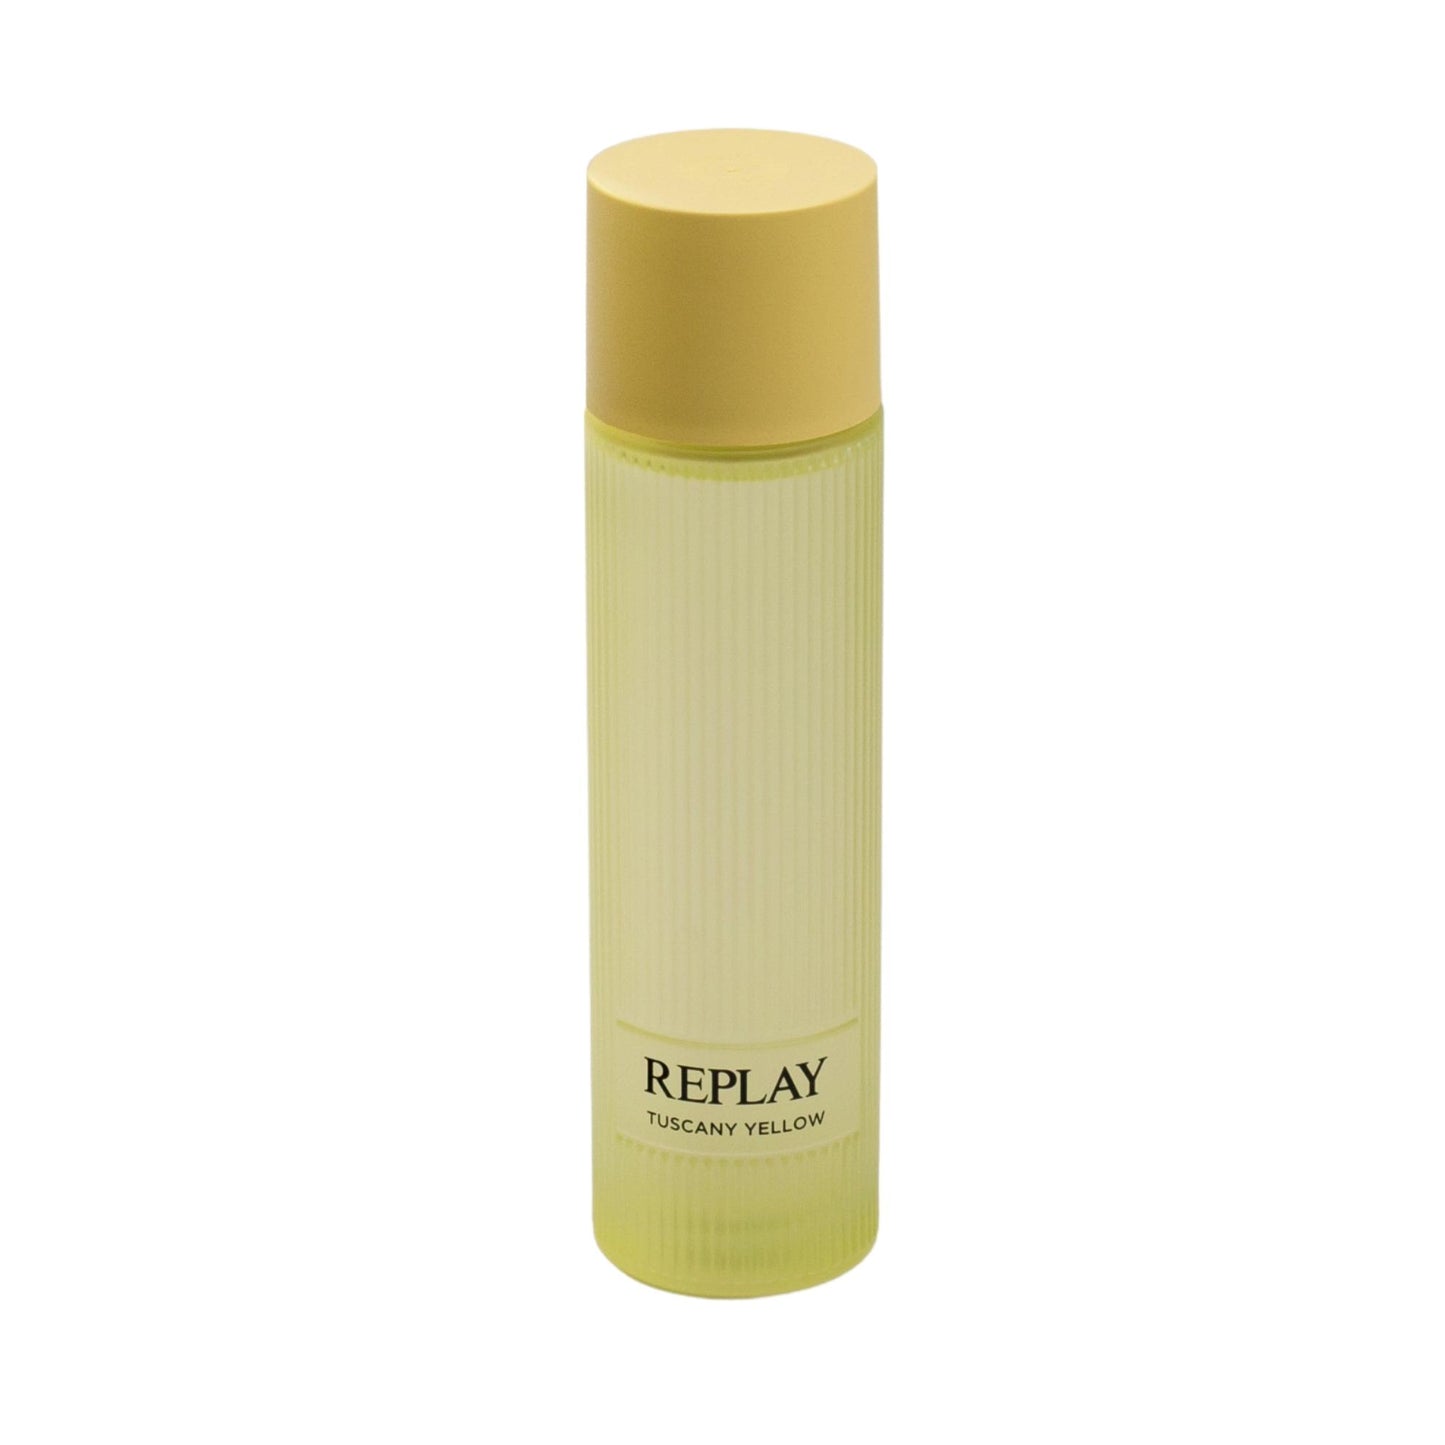 Replay TUSCANY YELLOW - Natural body fragrance 200 ml – Eau de Toilette